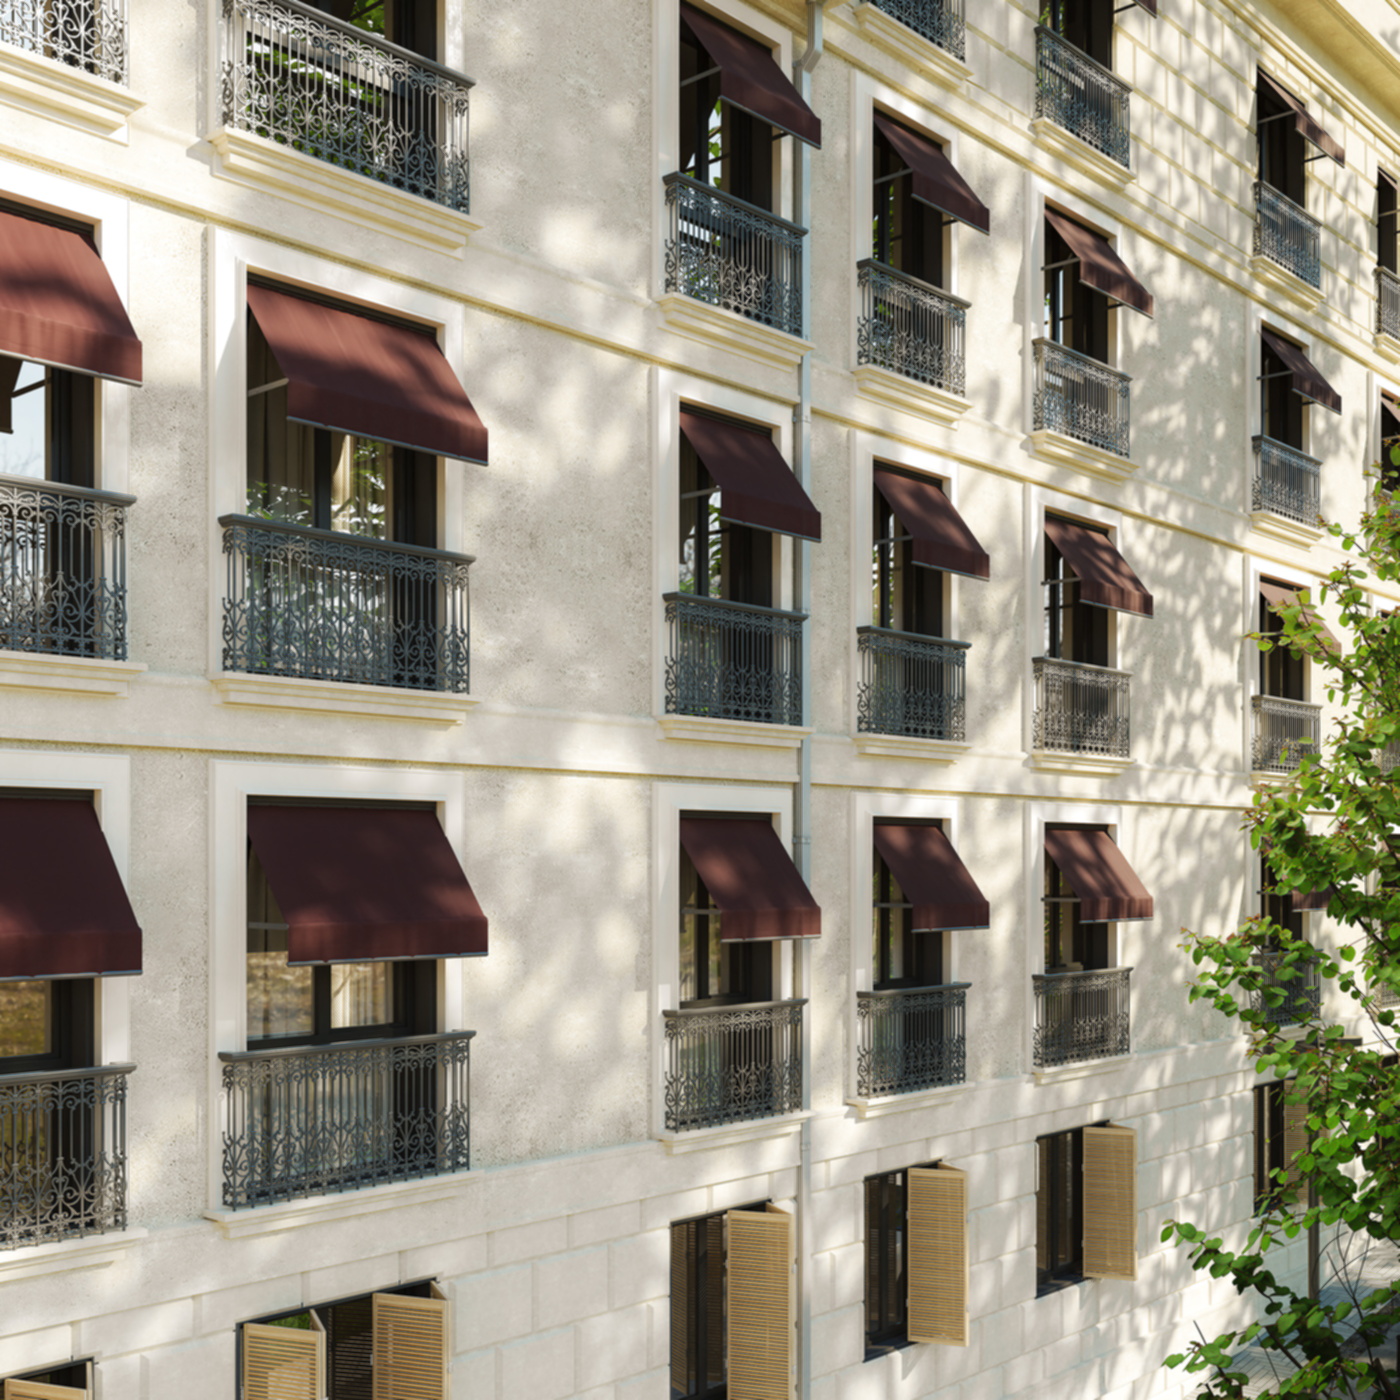 One Bedroom Flat in Golden Palace Project | Beyoglu, Haliç